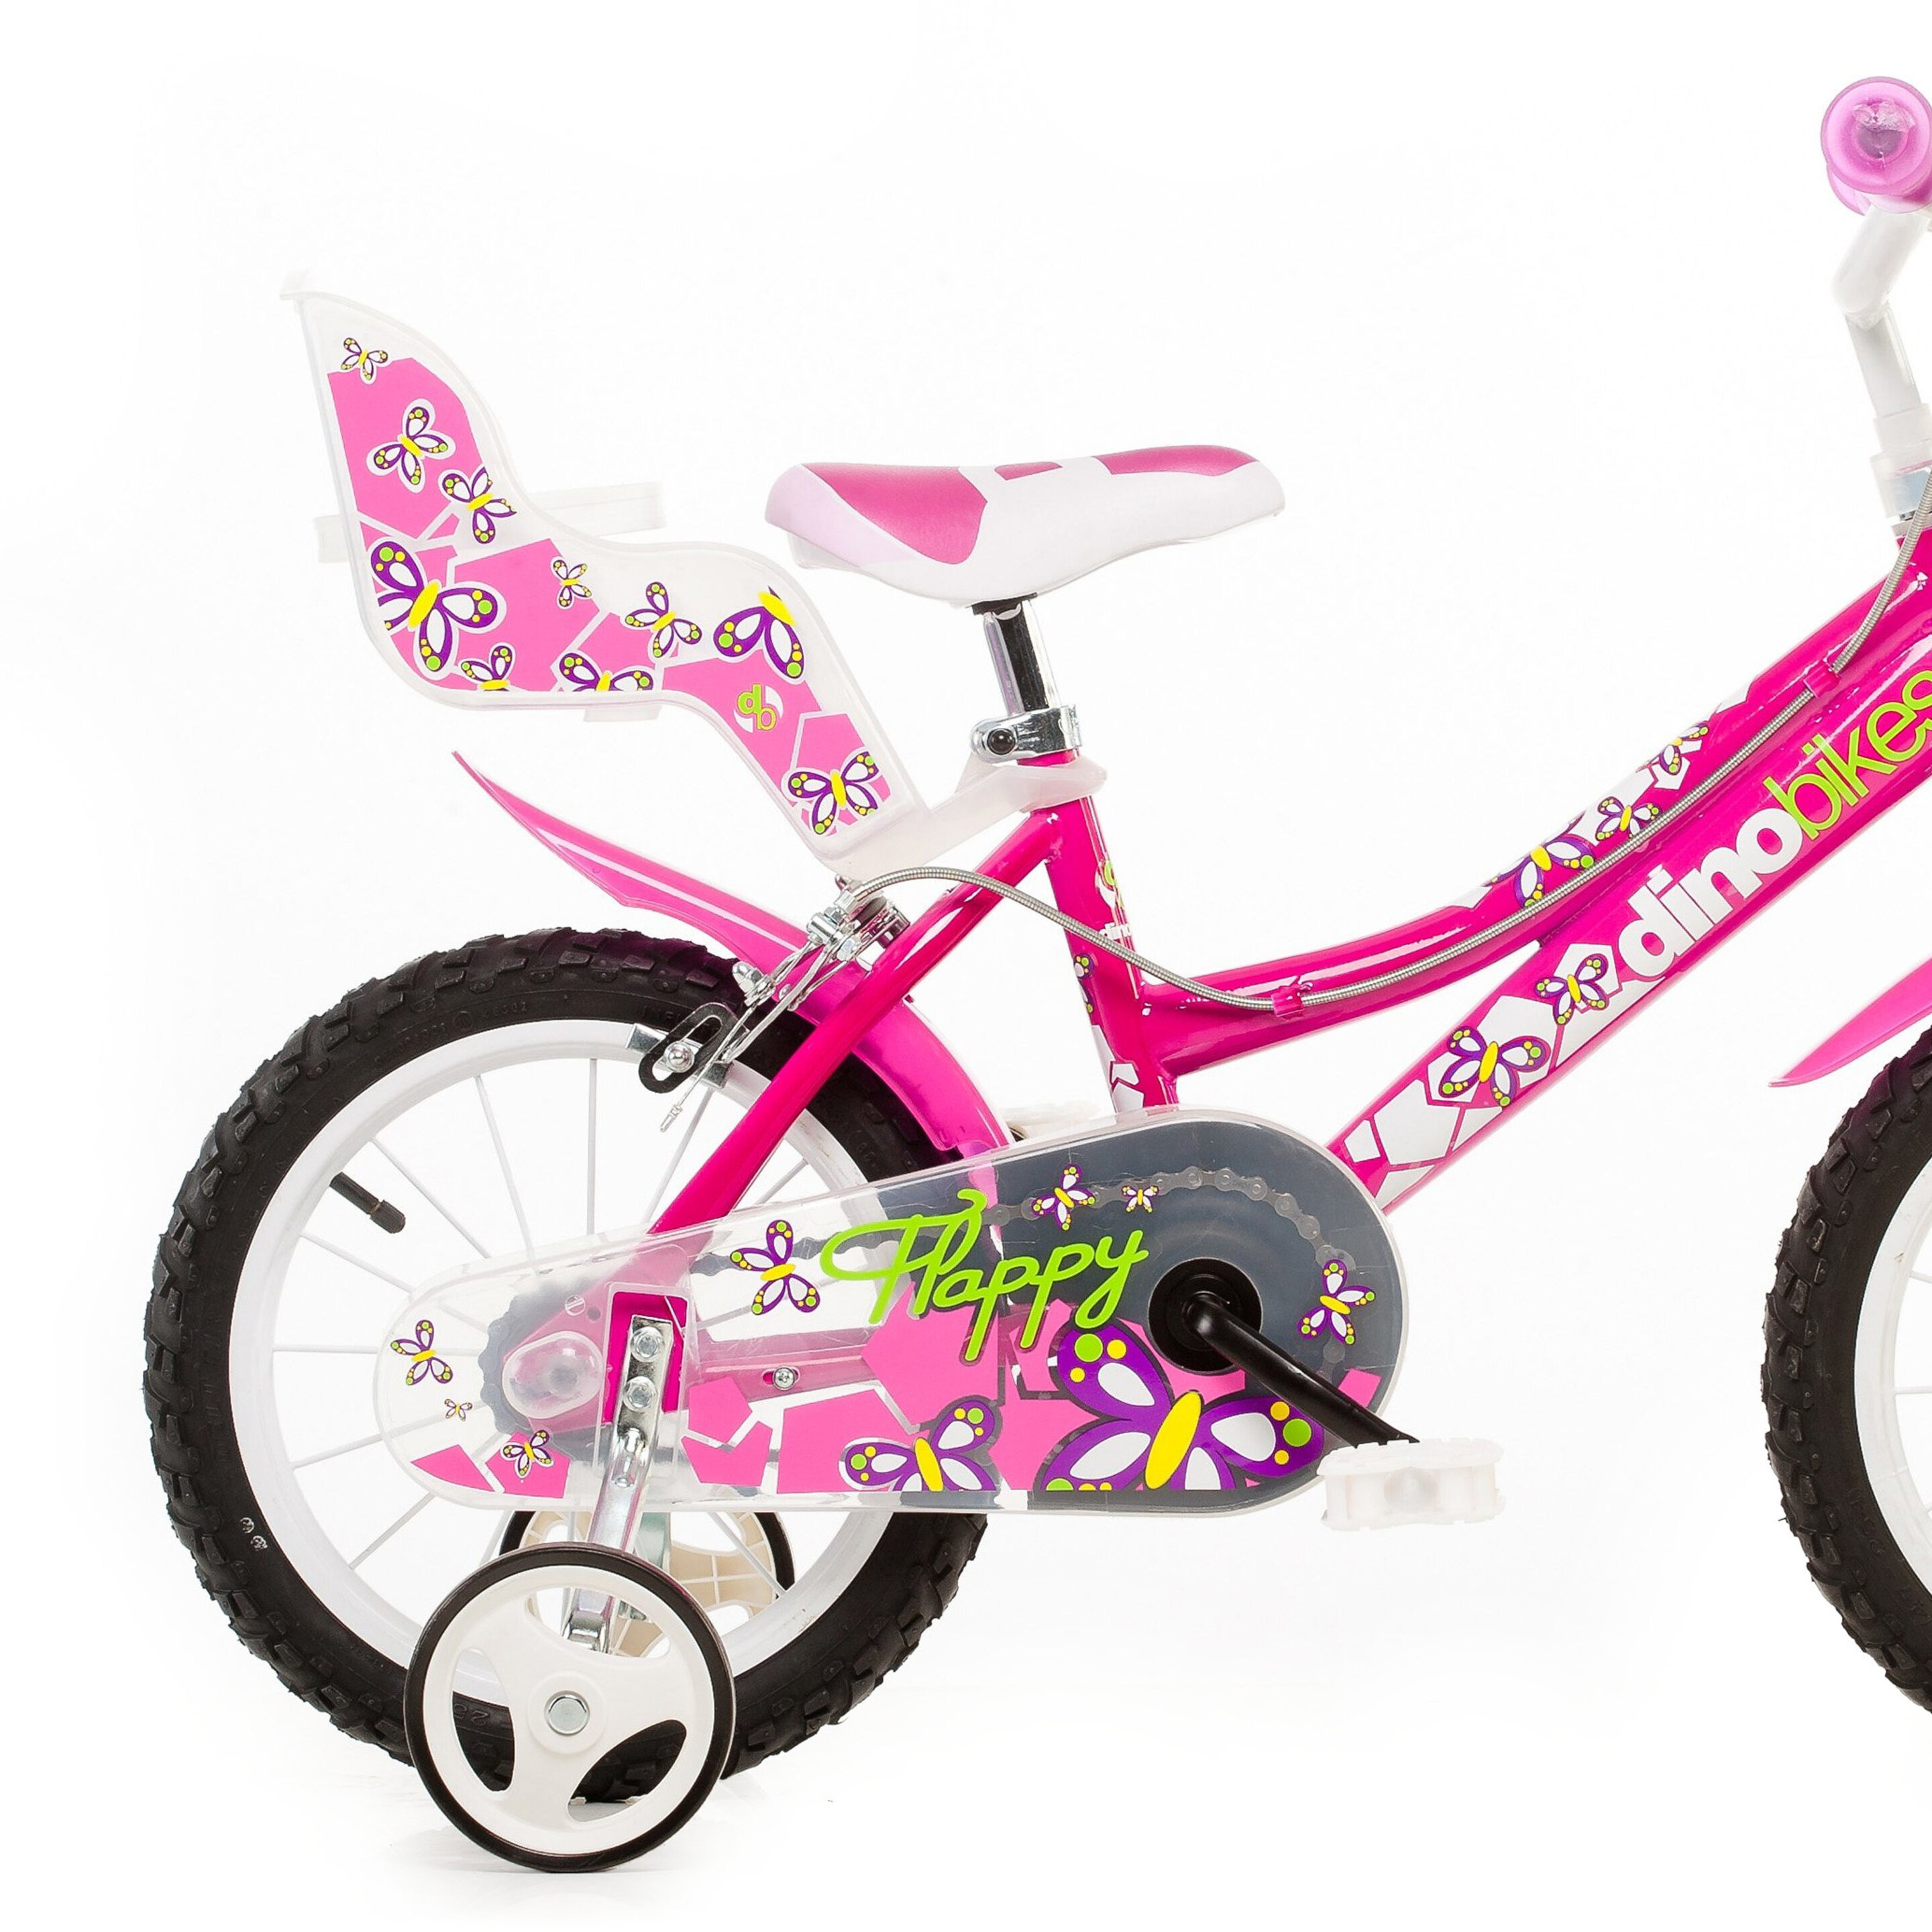 Bicicleta Infantil Happy 16 Pulgadas